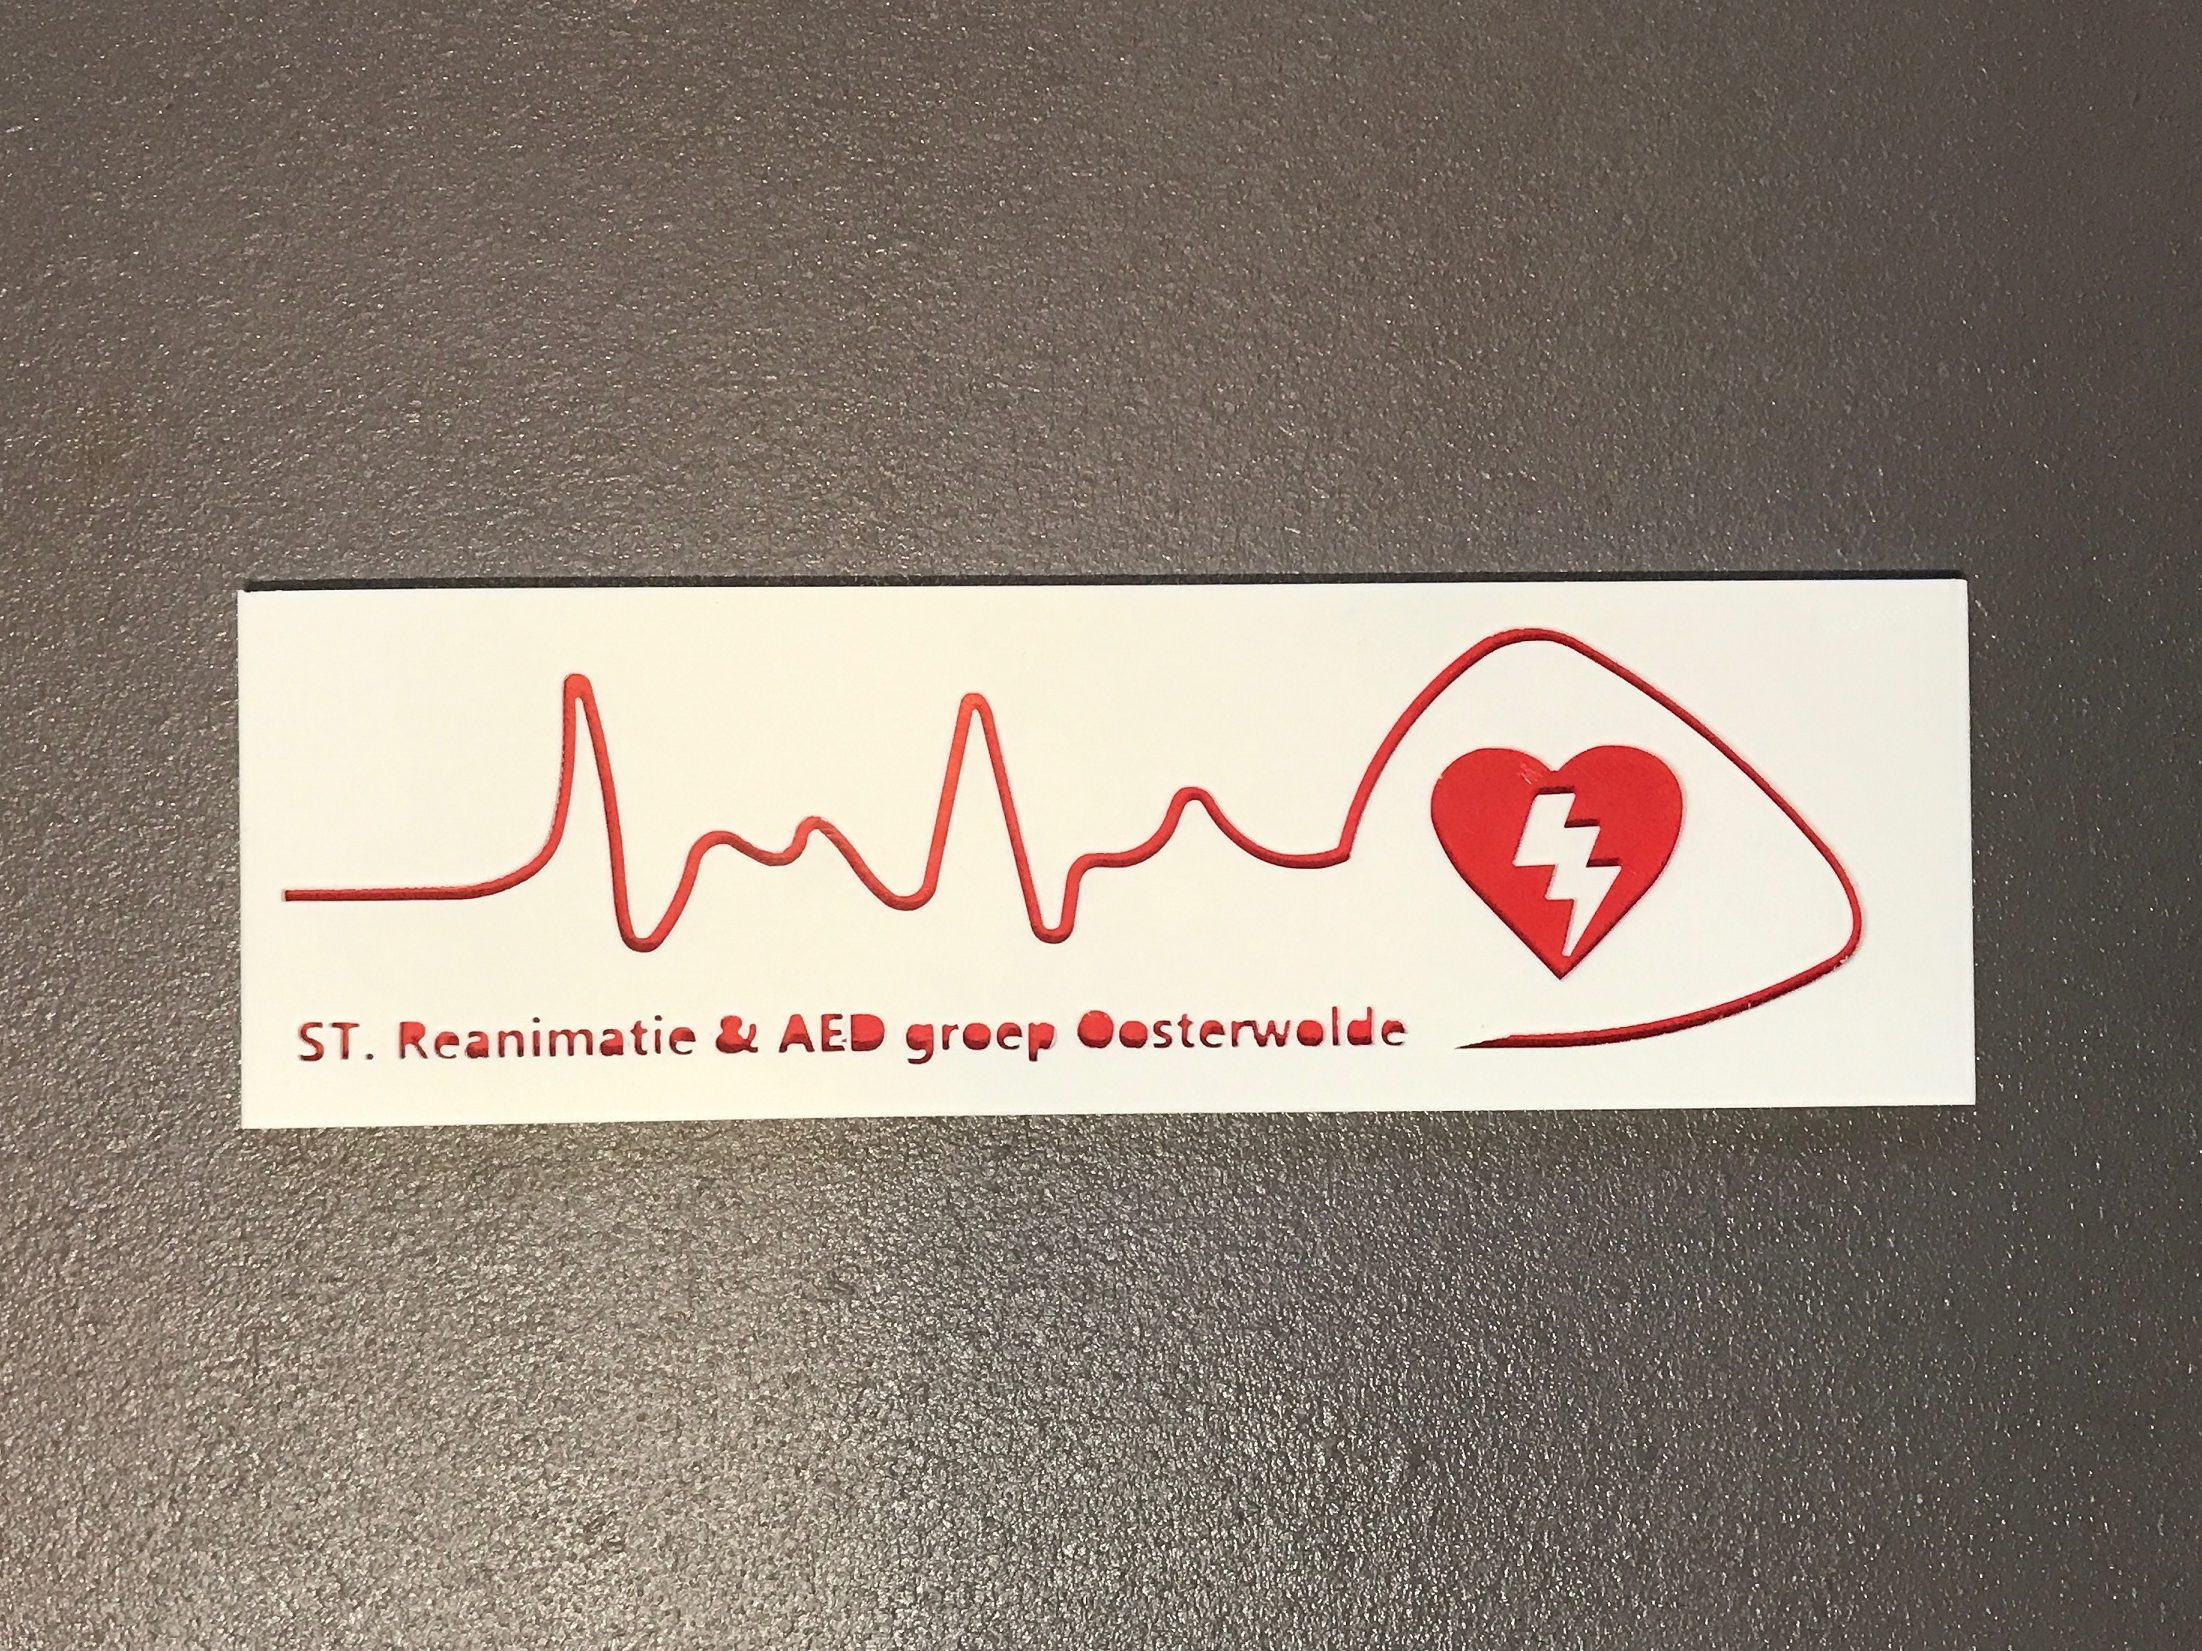 ST. Reanimatie & AED groep Oosterwolde